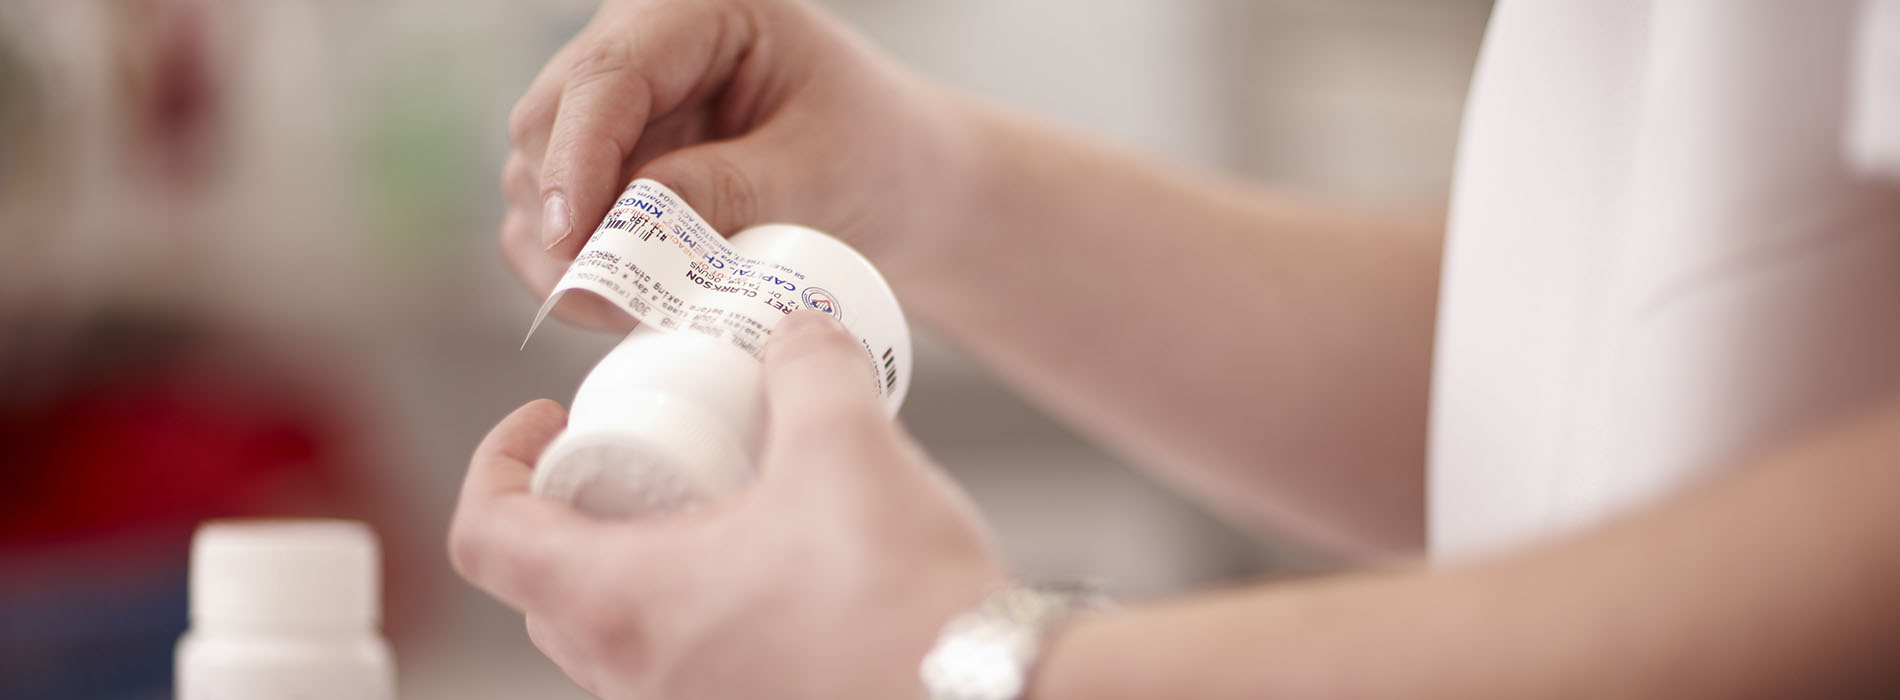 Pharmacist placing a label on a prescription bottle